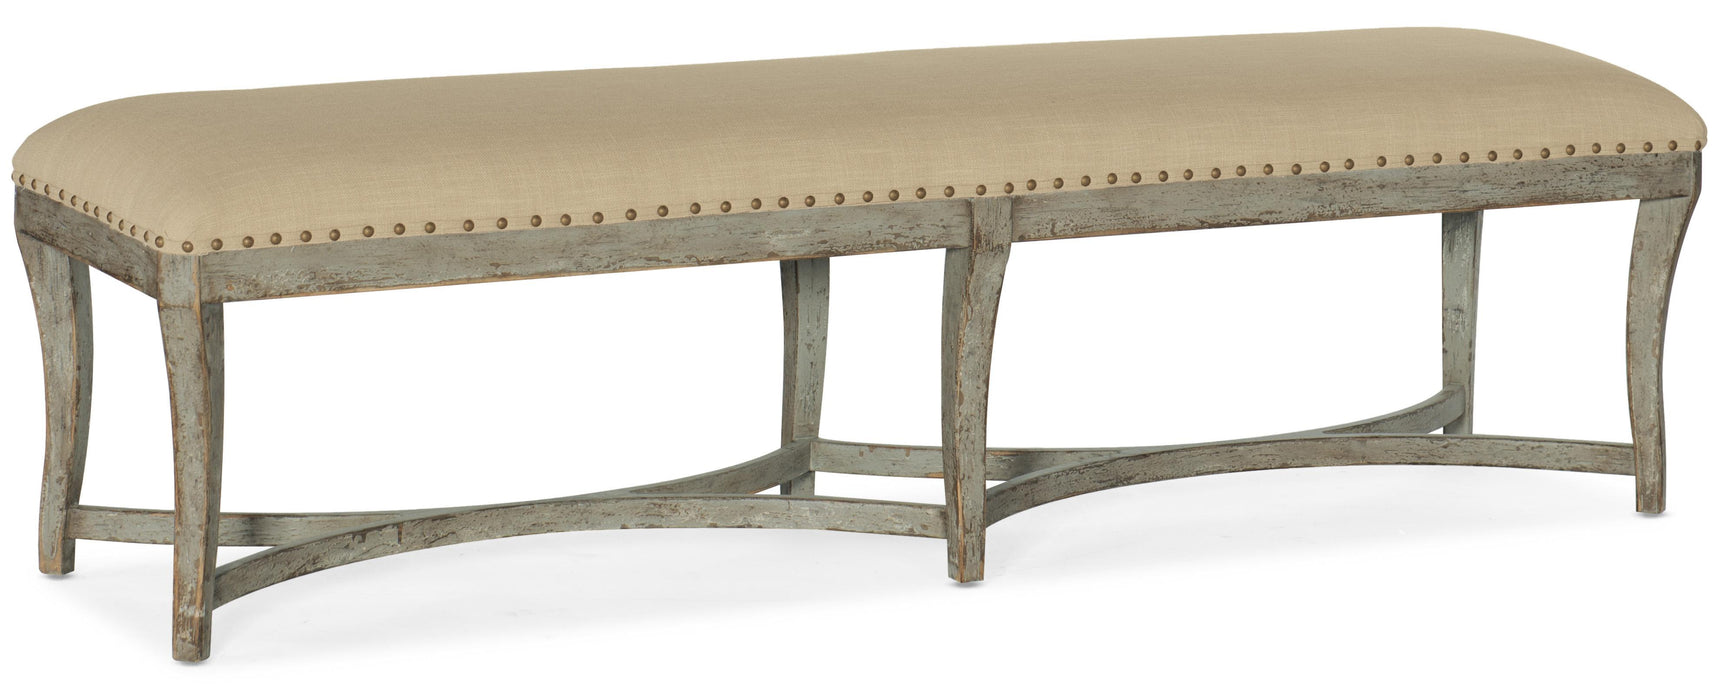 Alfresco Panchina Bed Bench